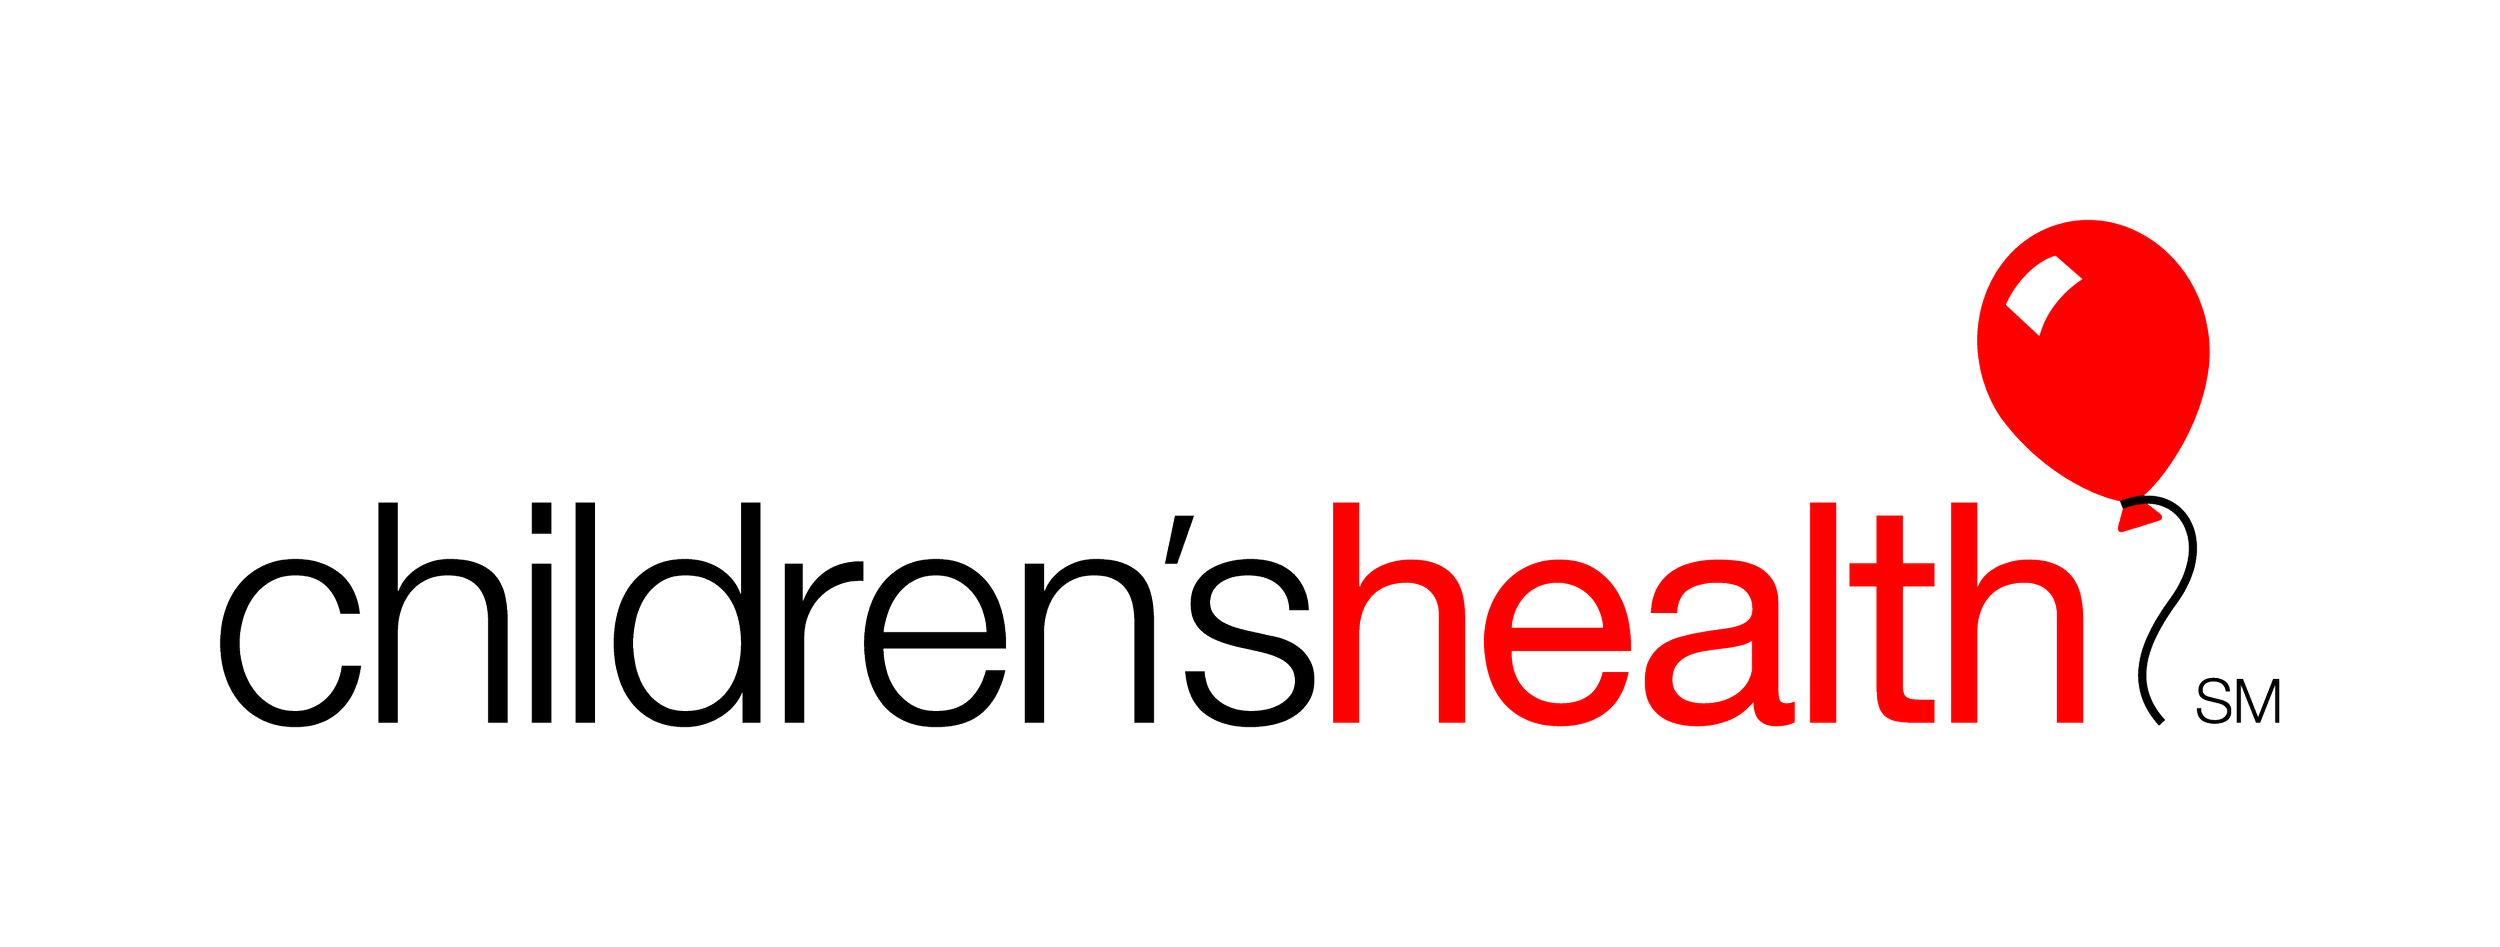 Childrens-Health_Logo.png